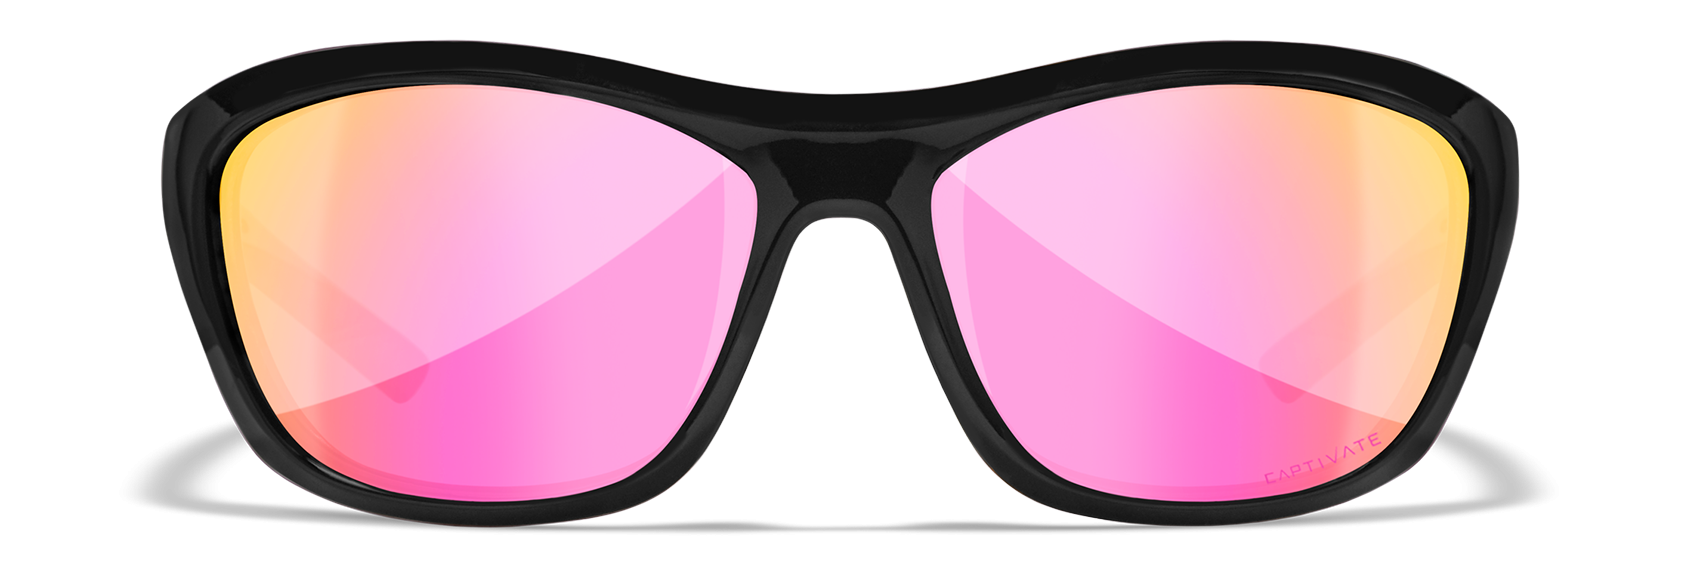 Wiley X WX Glory Gloss Black Polycarbonate Sunglasses